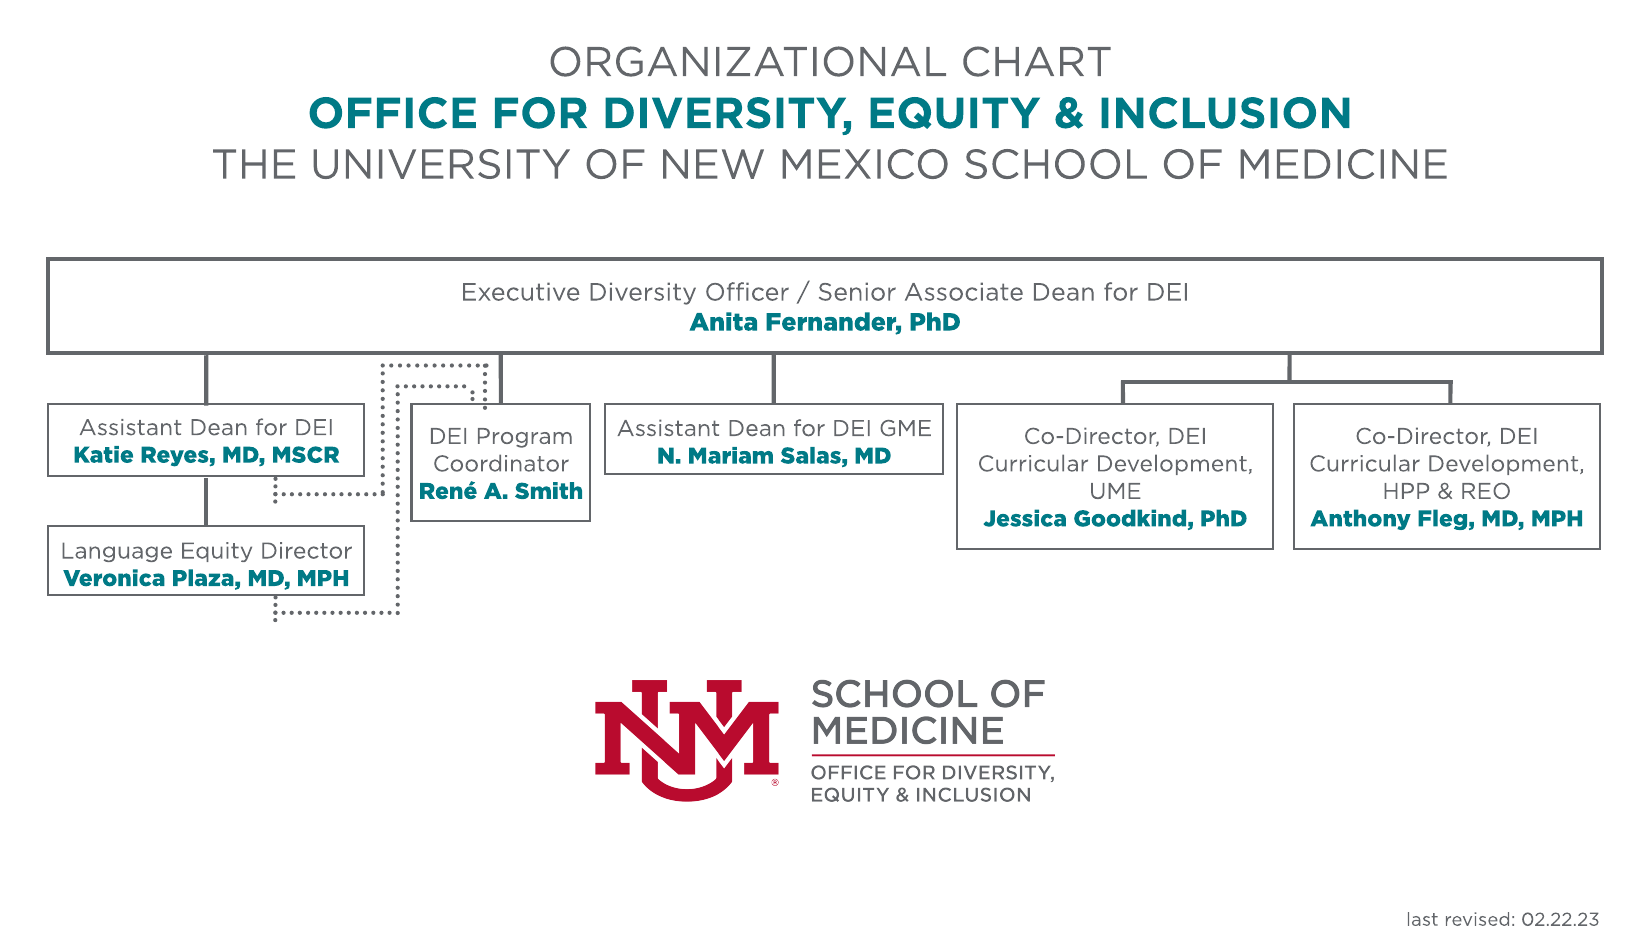 Organigramm des UNM School of Medicine Office for Diversity, Equity & Inclusion